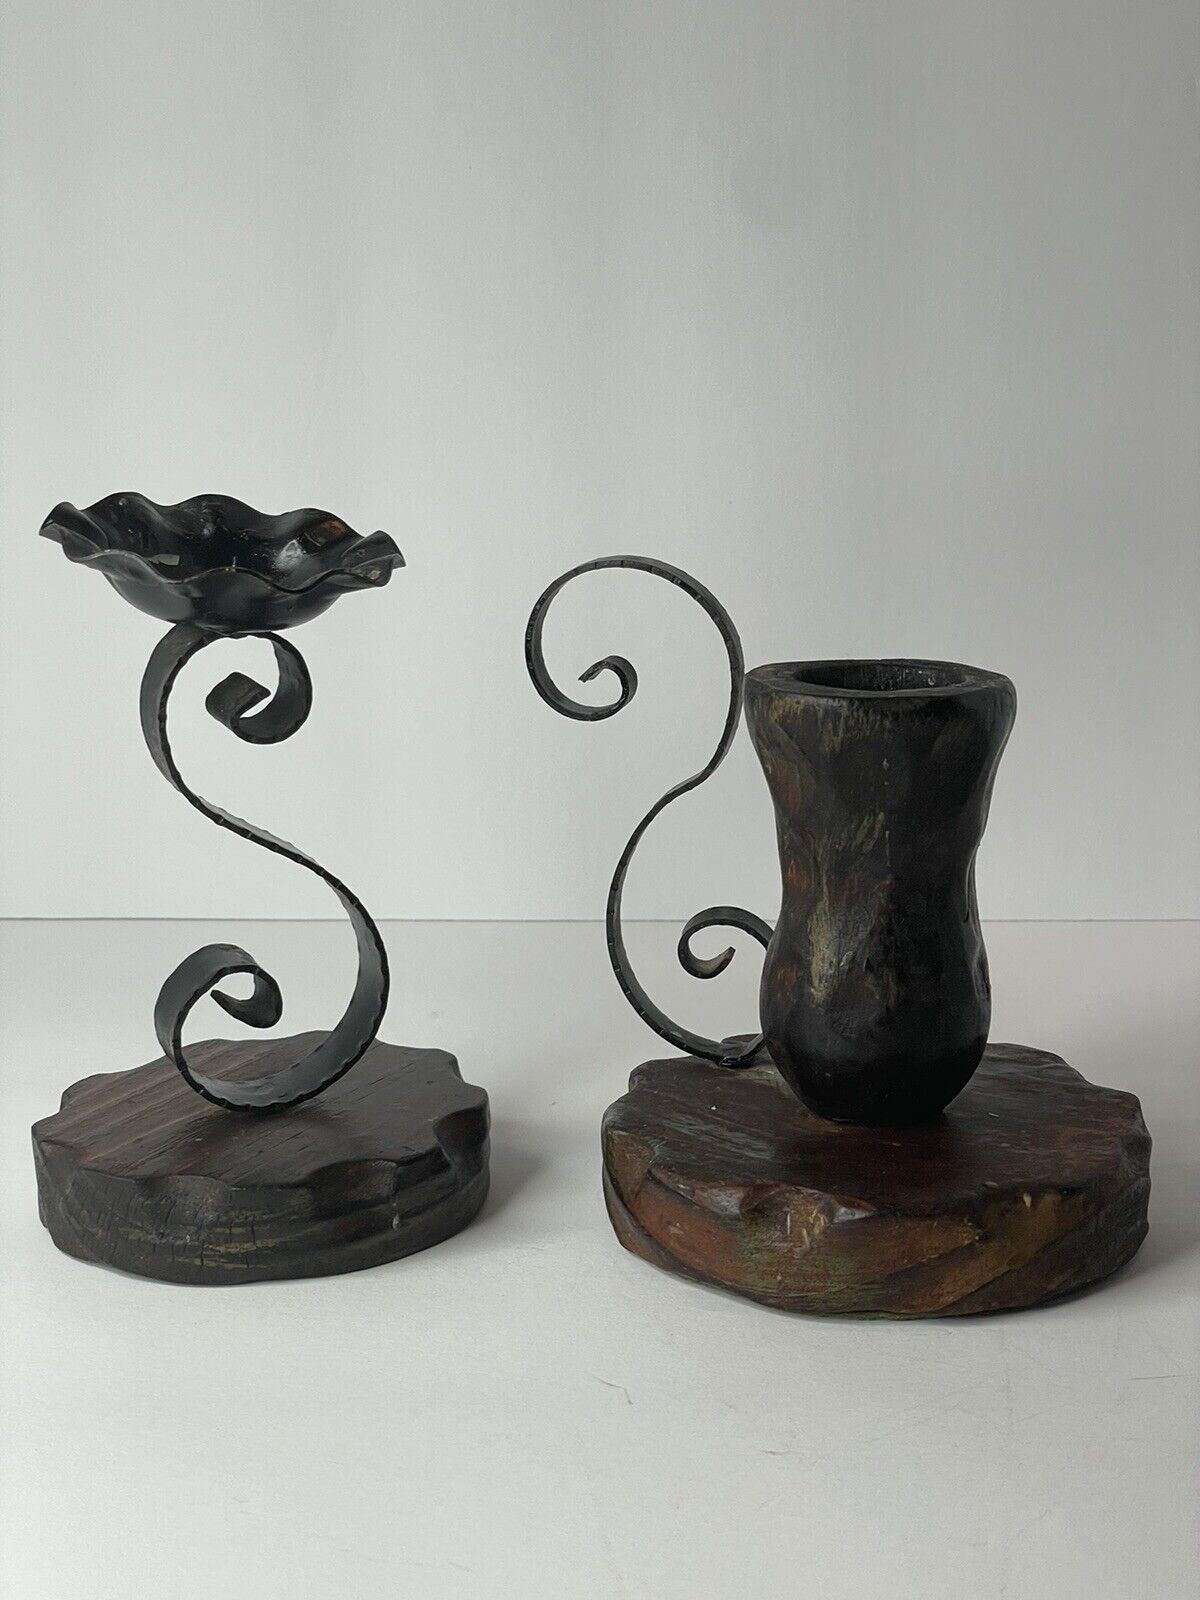 Rustic Primitive Wood & Metal Bent Scrolled Candle Holder Sculpture Cabin Art